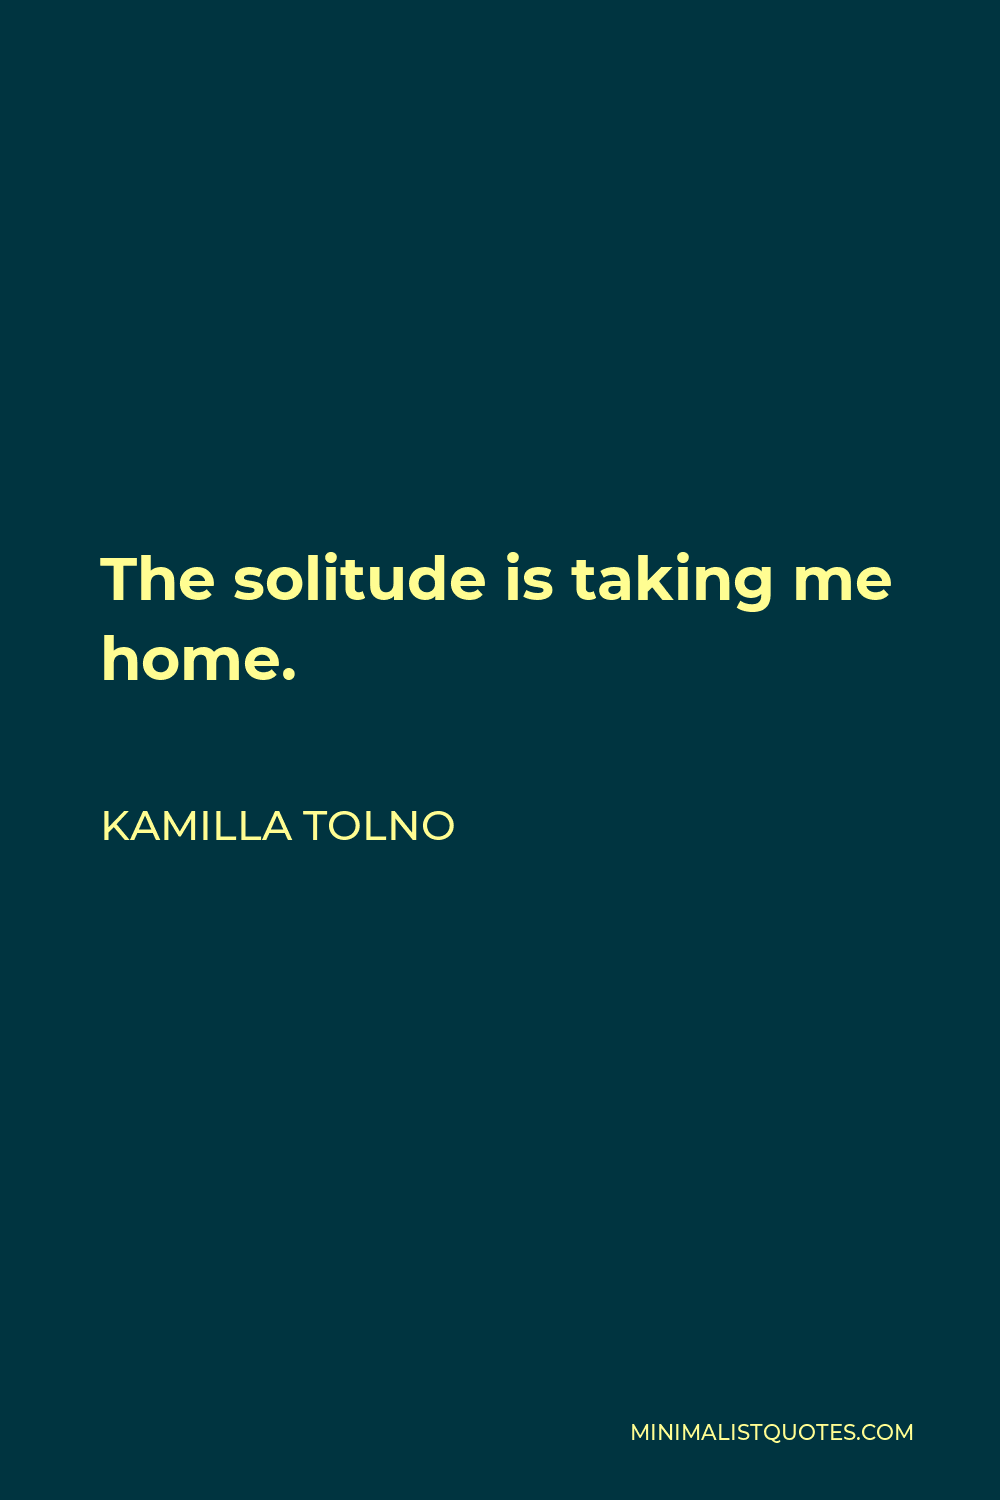 Kamilla Tolno Quote - The solitude is taking me home.